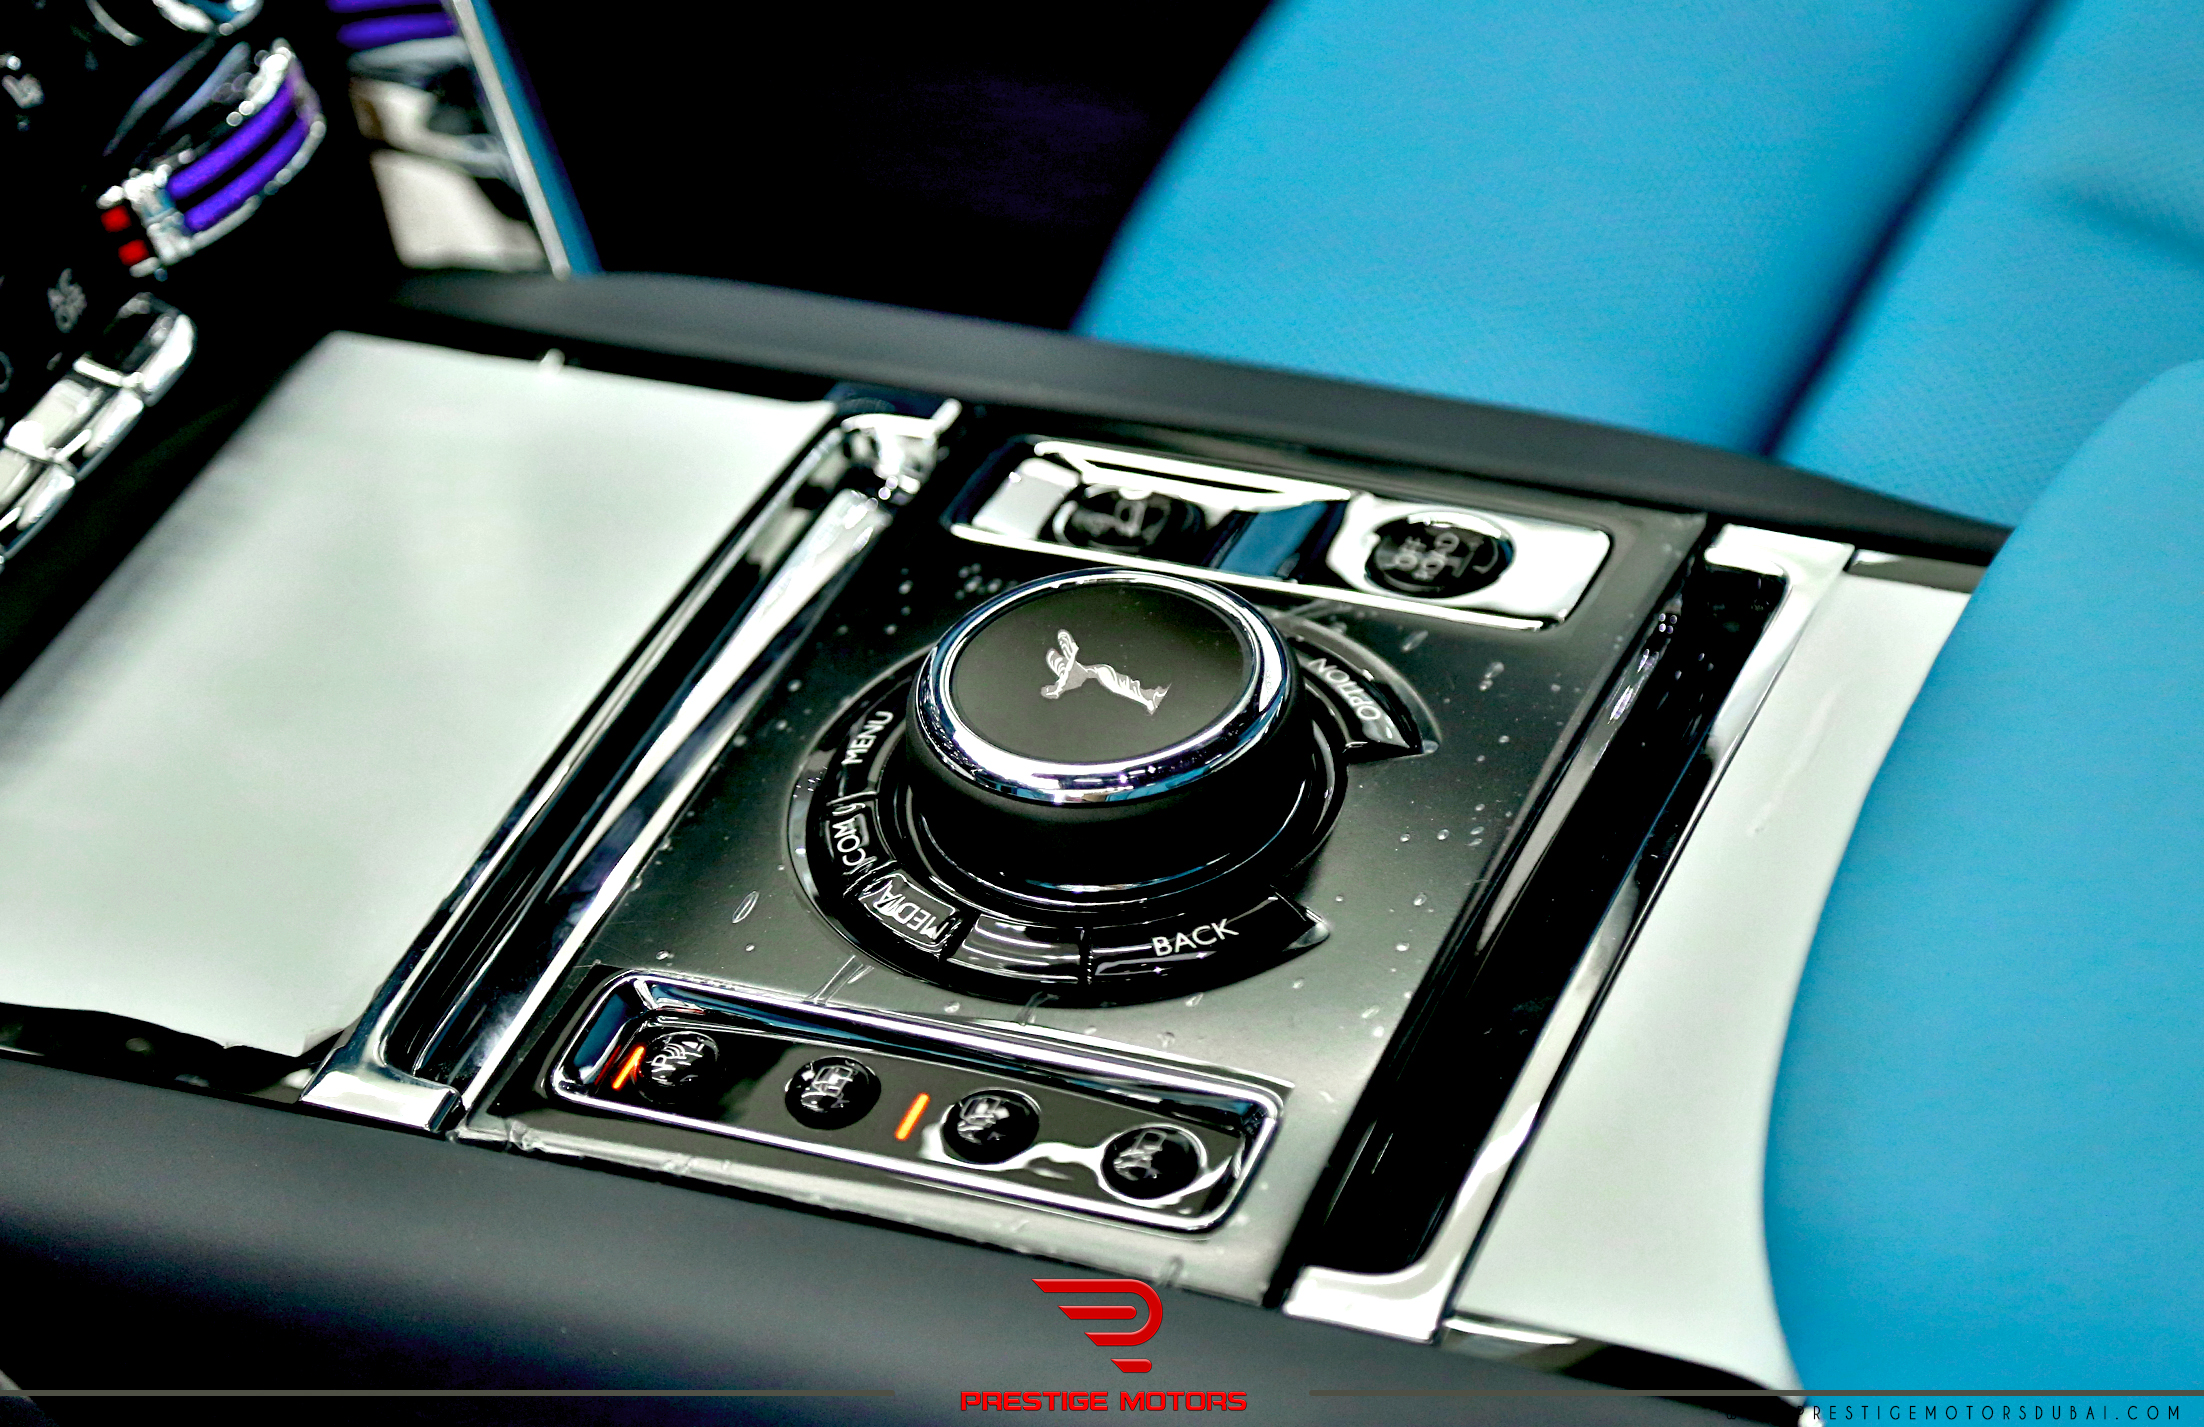 Rolls-Royce Cullinan 2023 Ultra-Luxurious Inclusive Warranty and Service Package Prestige Motor Dubai